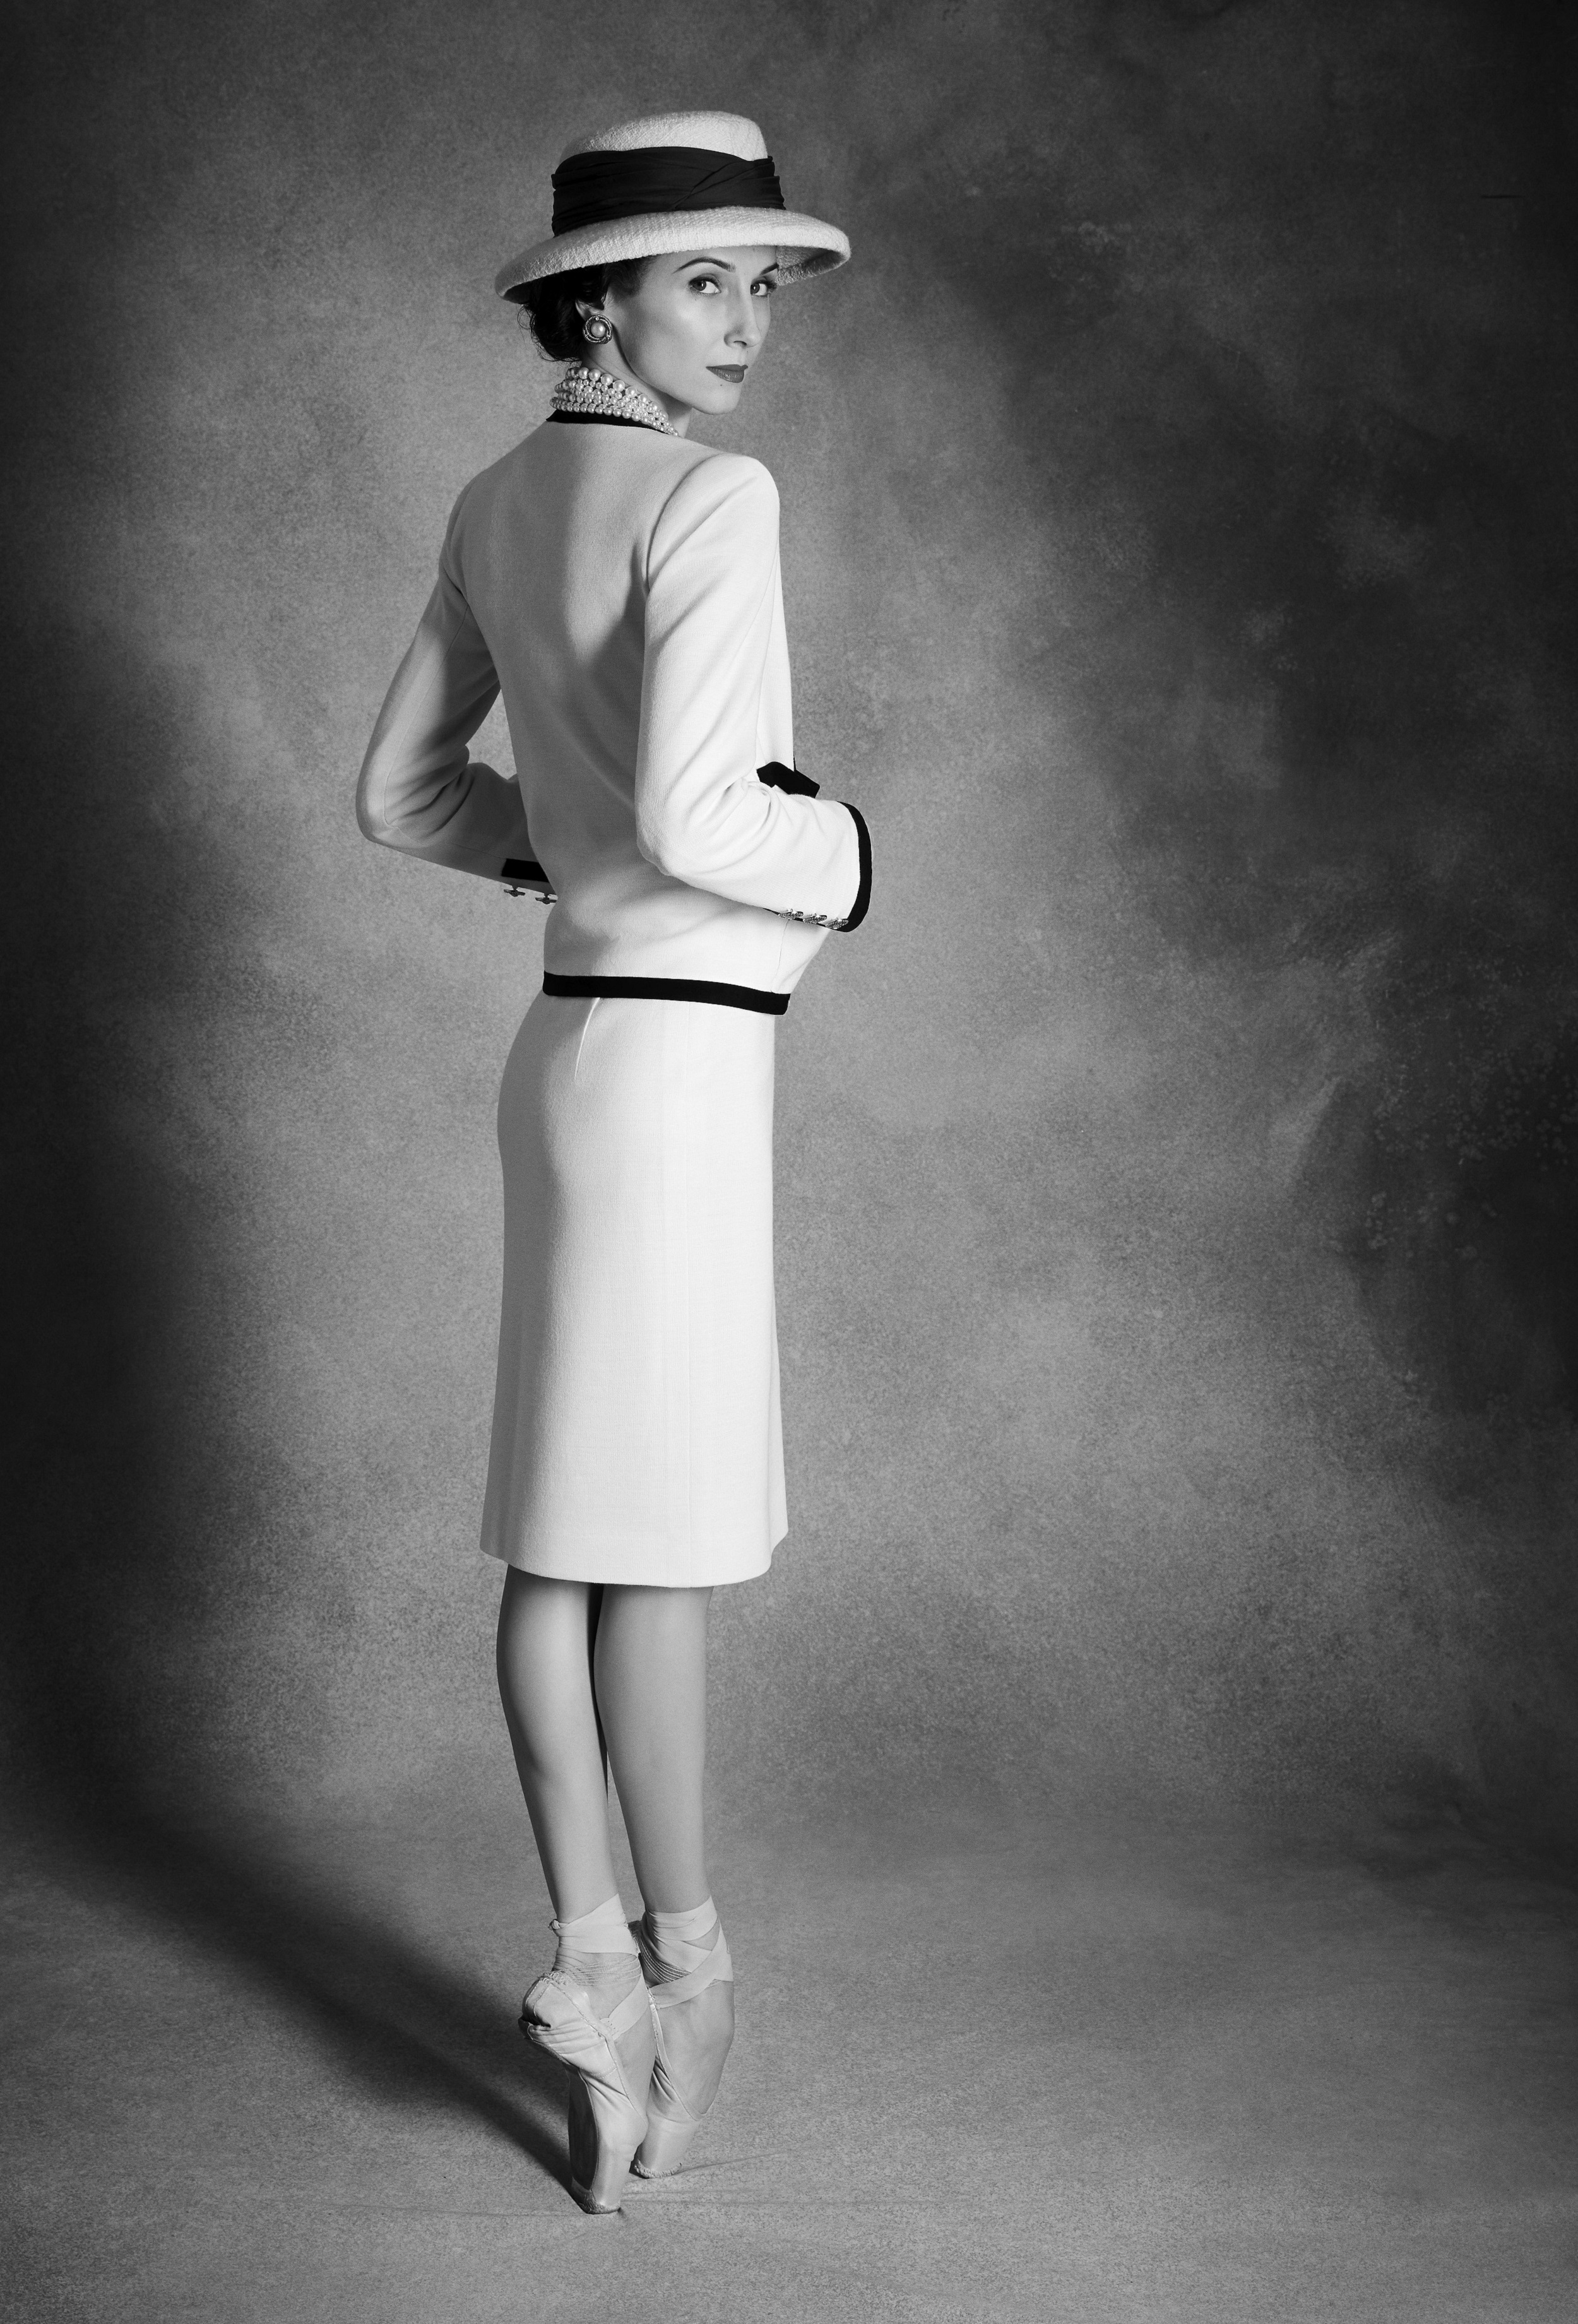 Behind The Fashion Icon: Coco Chanel Story - Fashinnovation